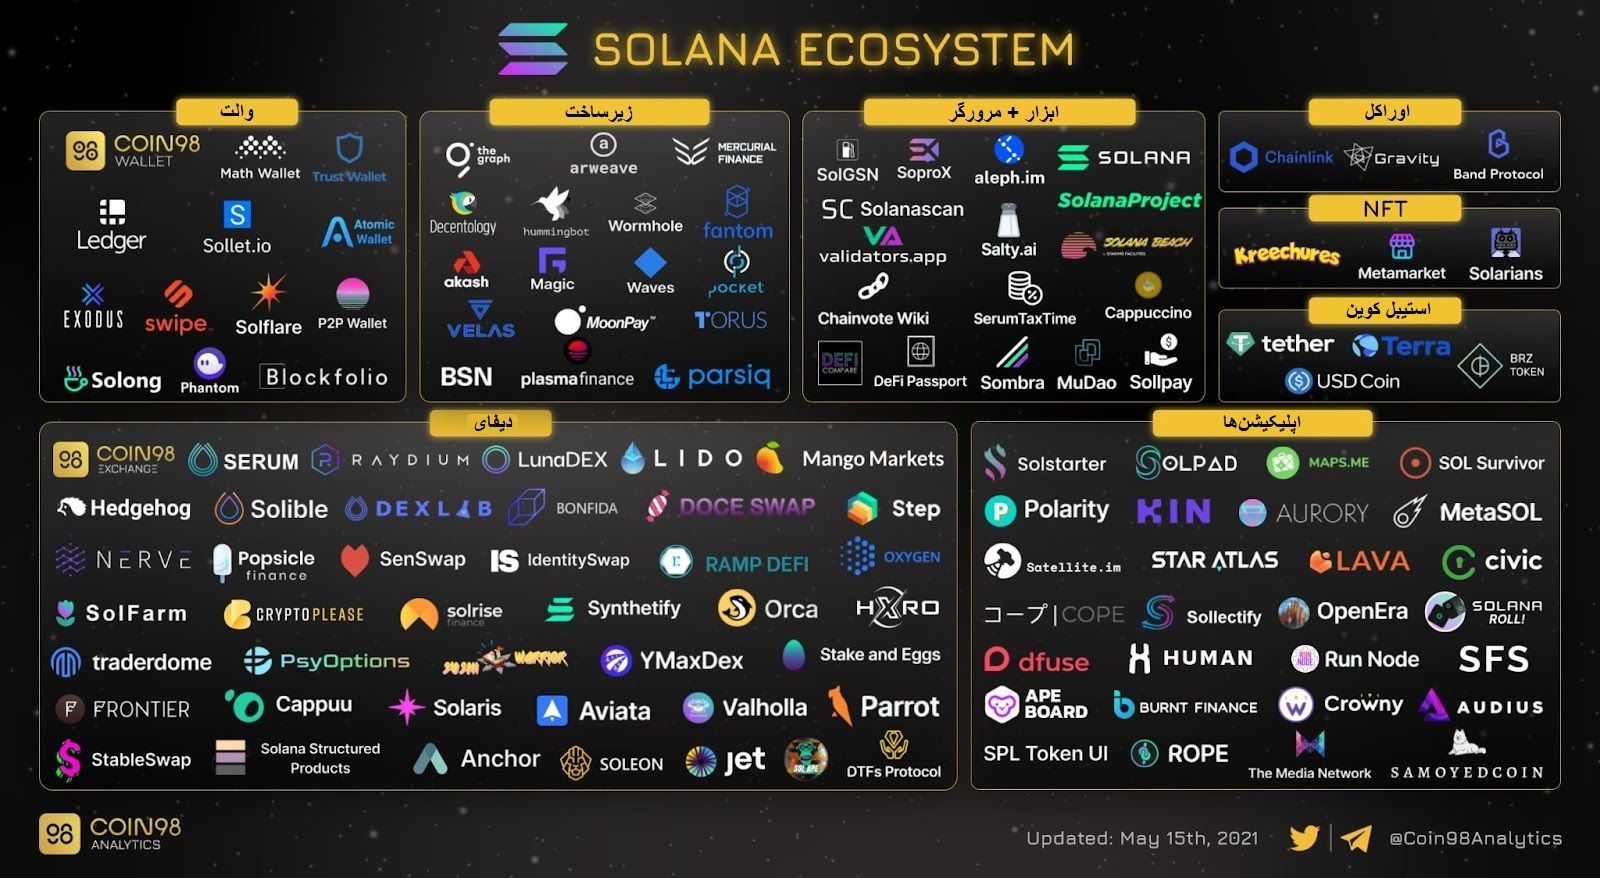 Solana Ecosystem